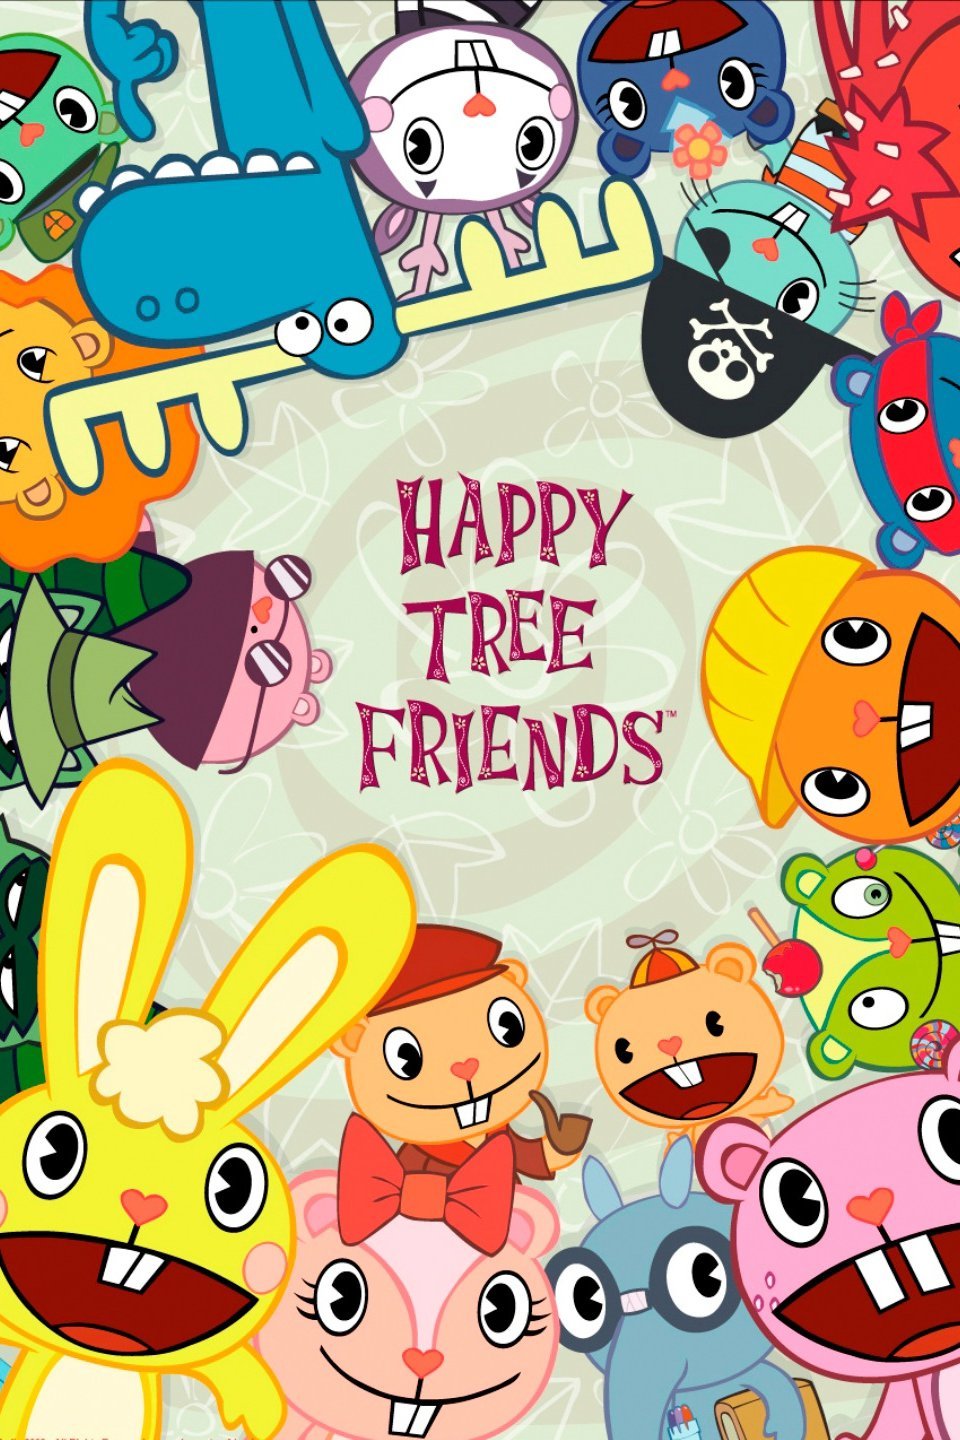 Happy Tree Friends ハッピー ツリー フレンズ Htf ハピツリ のネタバレ解説 考察まとめ 4 5 Renote リノート